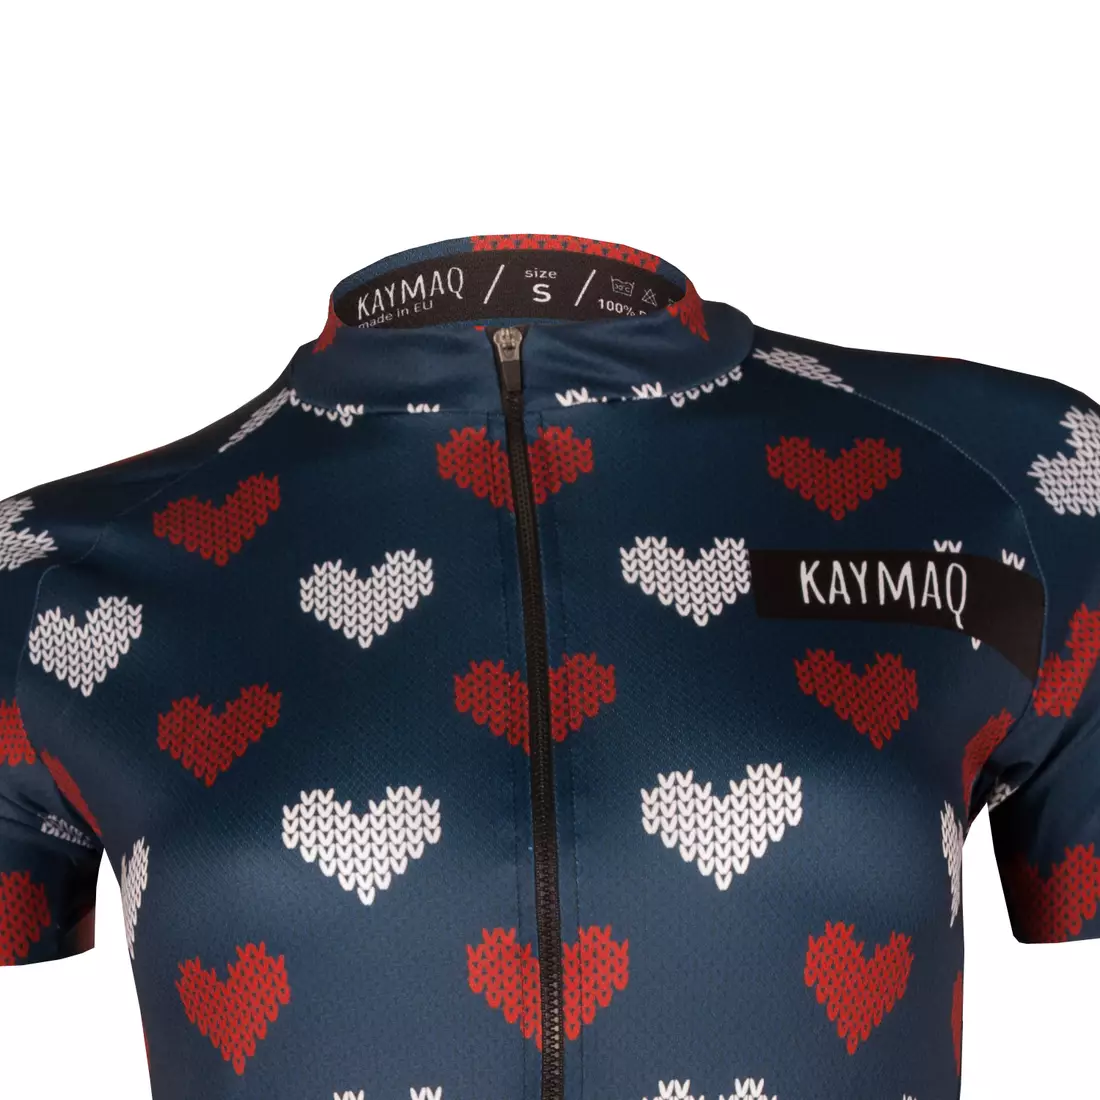 KAYMAQ DESIGN W31 dámský cyklistický dres, krátký rukáv